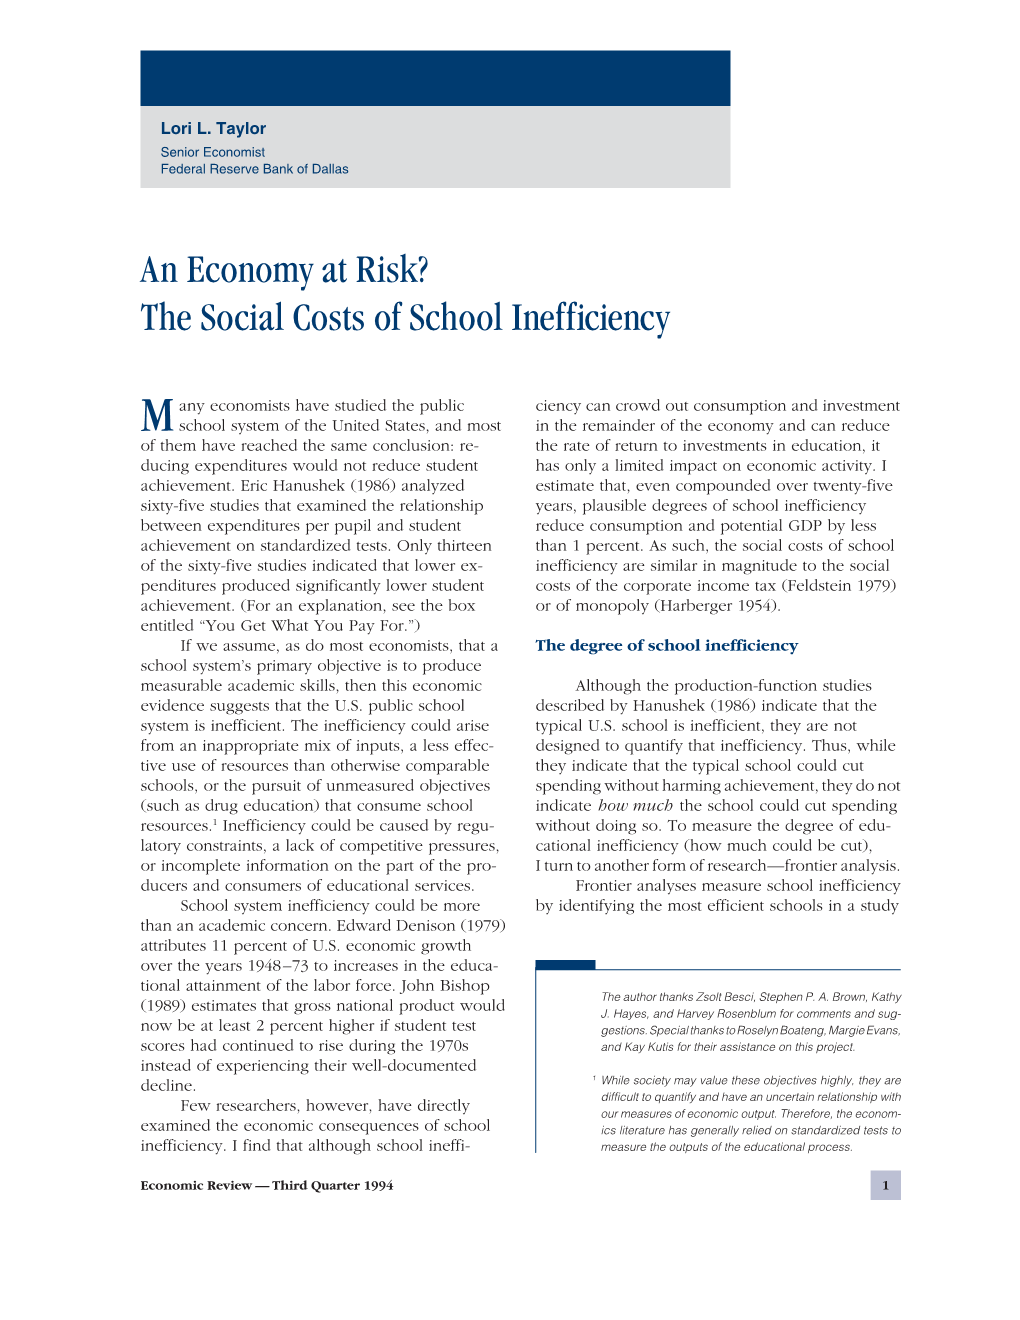 The Social Costs of School Inefficiency